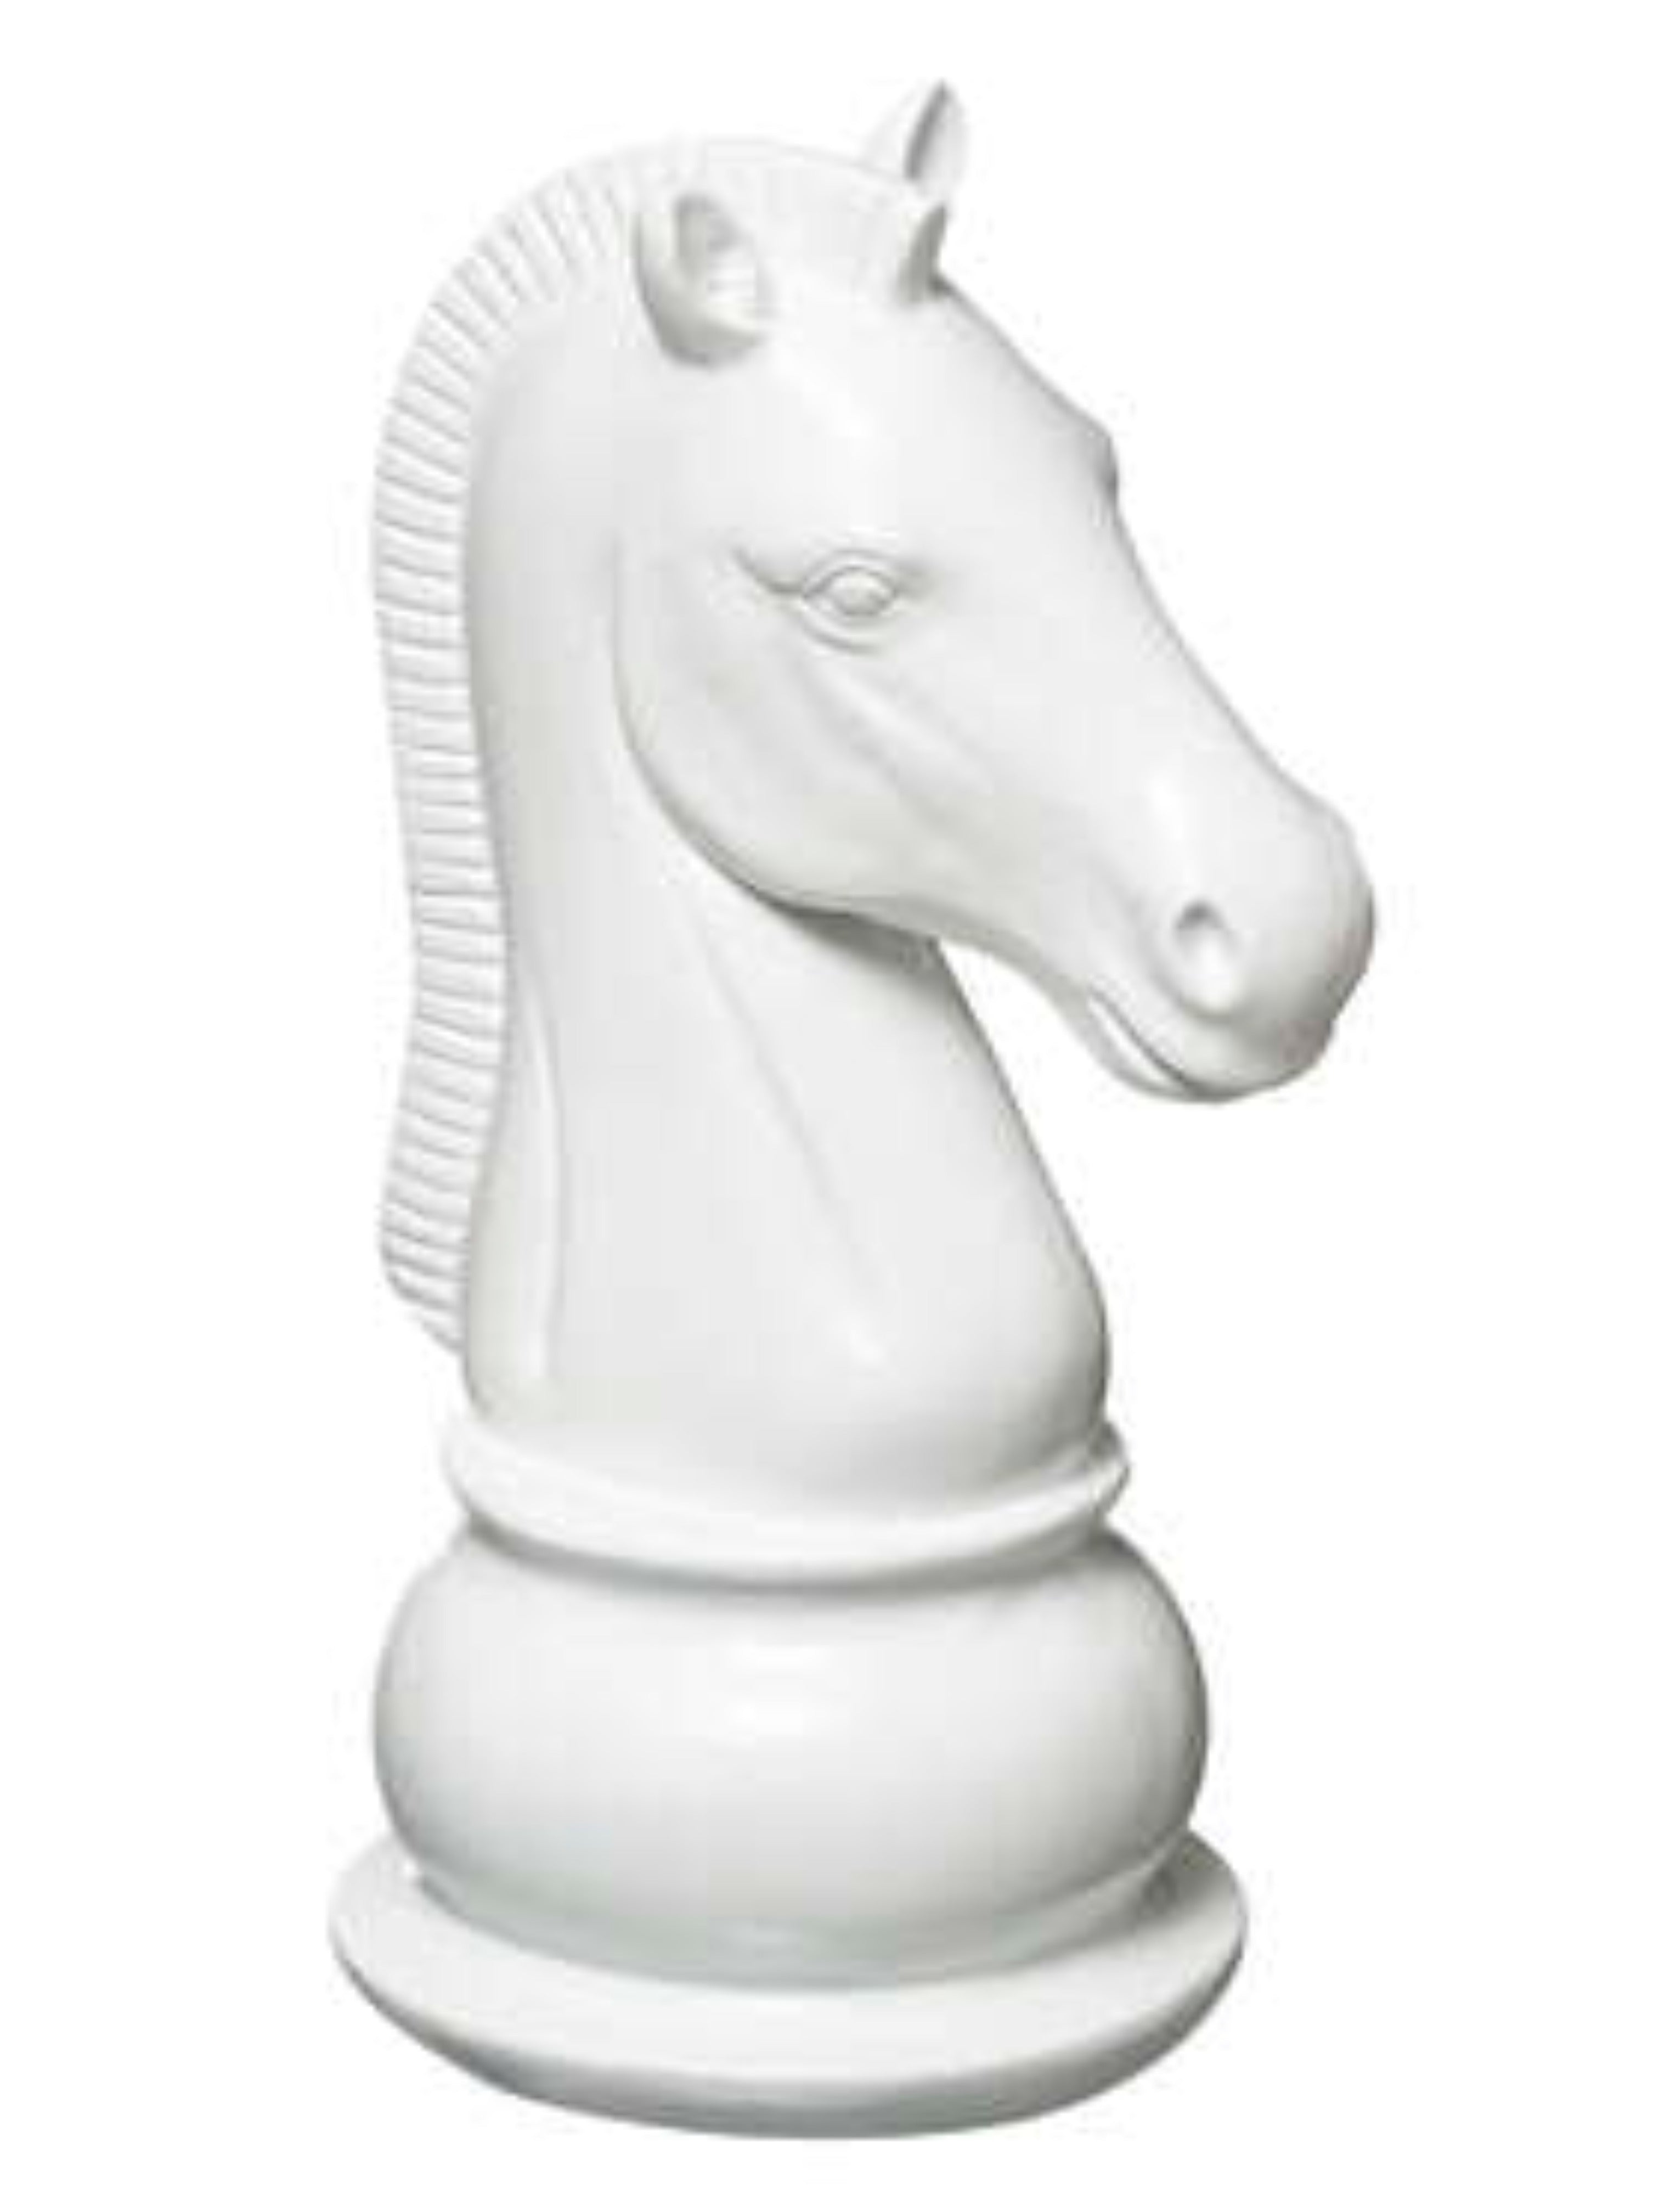 White Horse Chess Piece Ornament